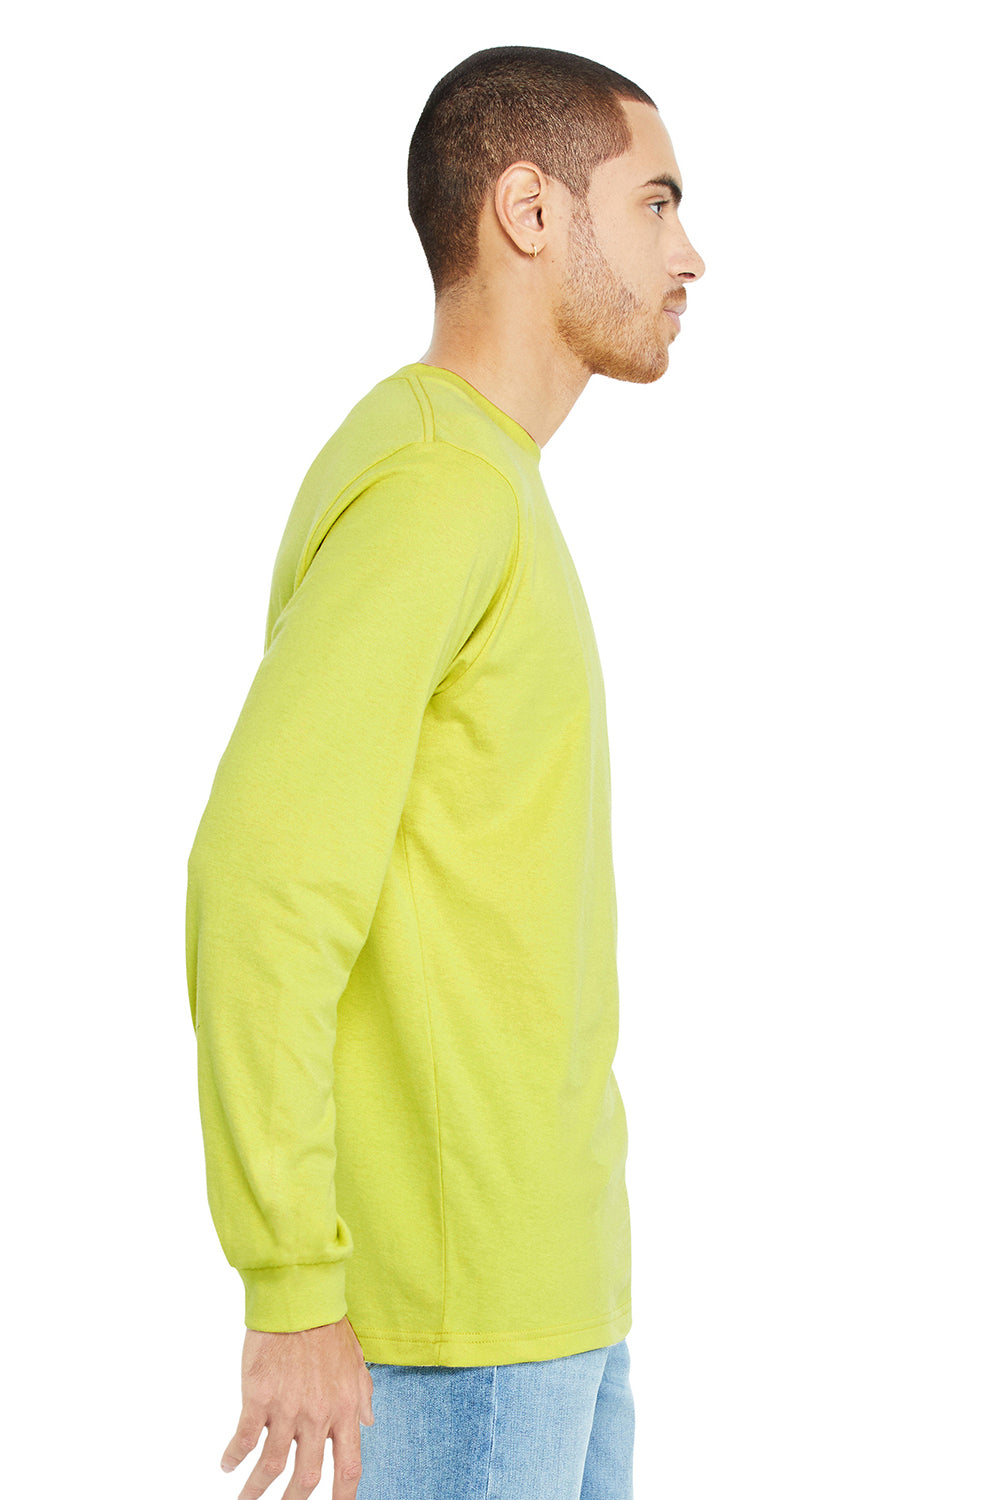 Bella + Canvas BC3501/3501 Mens Jersey Long Sleeve Crewneck T-Shirt Strobe Green Model Side